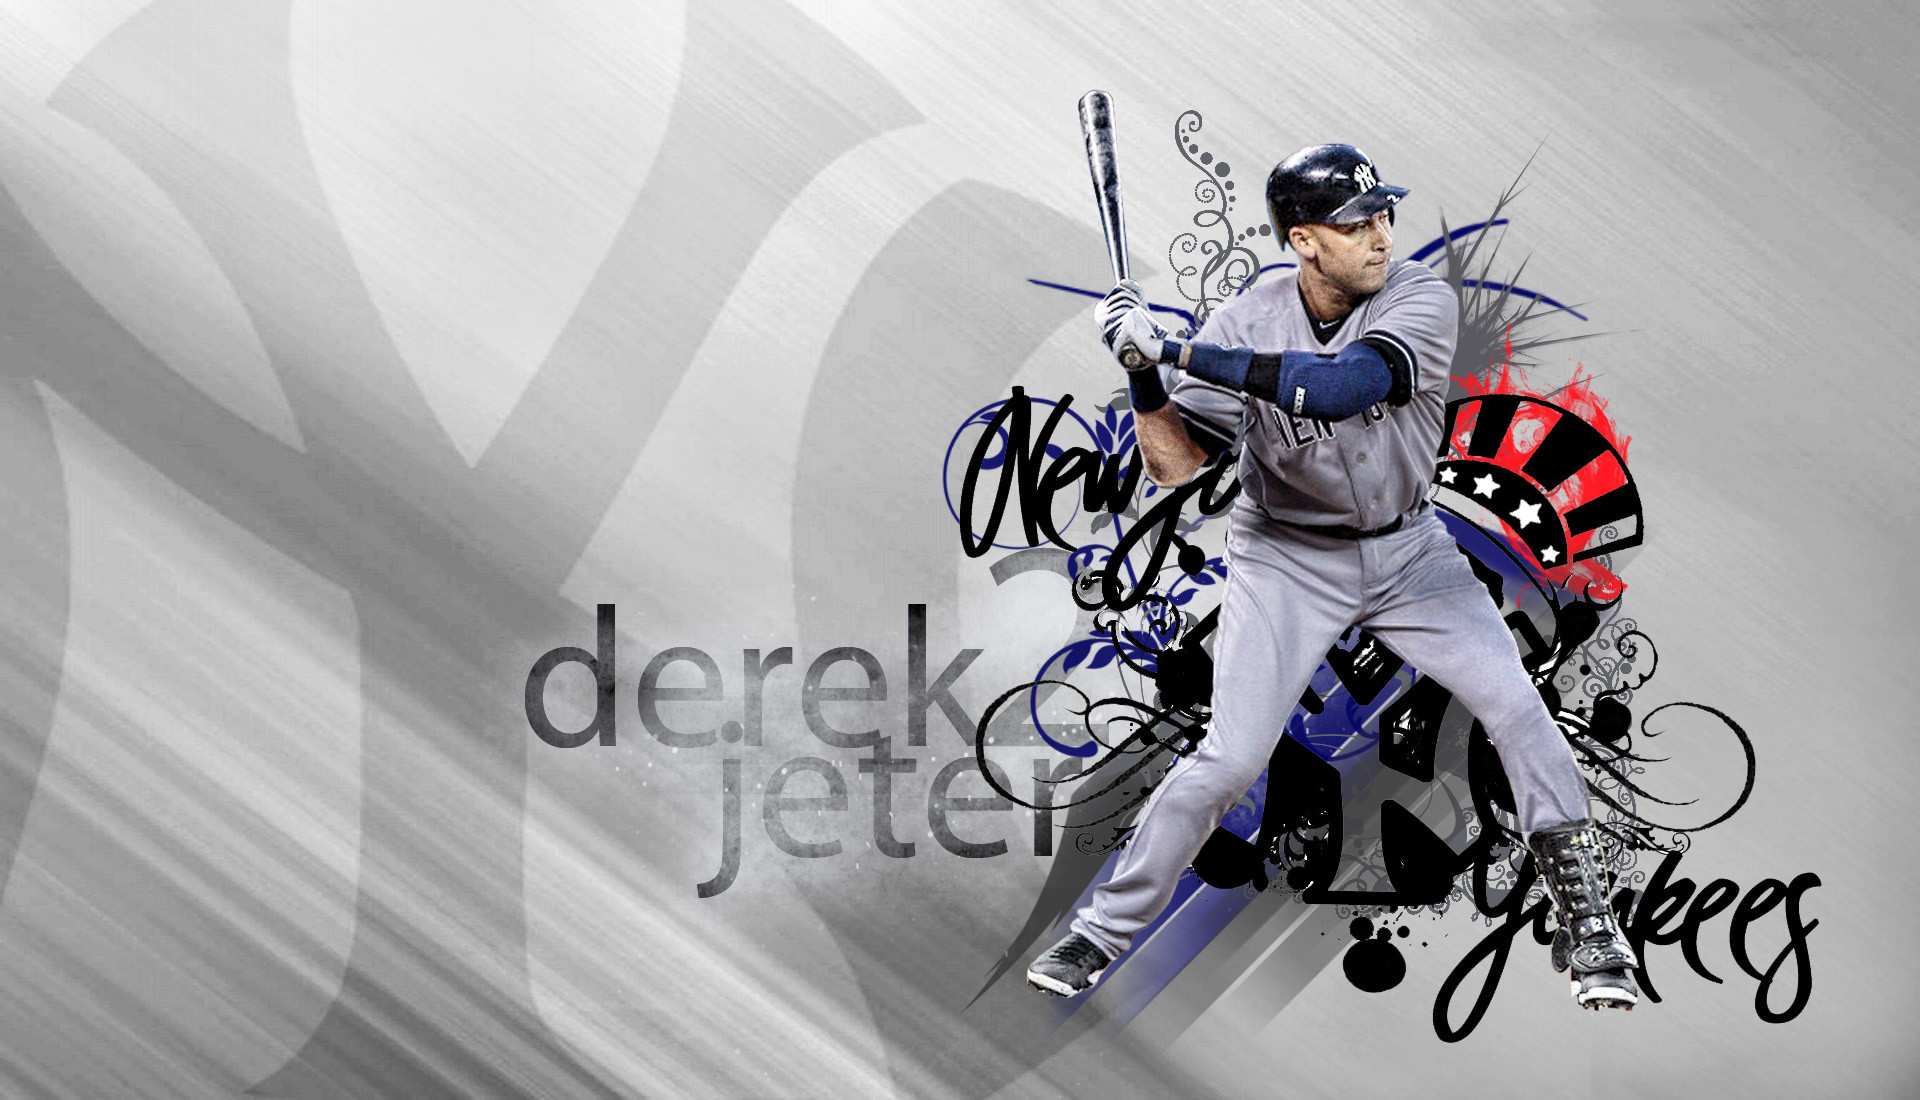 1920x1100 wallpaper.wiki-Derek-Jeter-New-York-Yankees-Wallpaper-